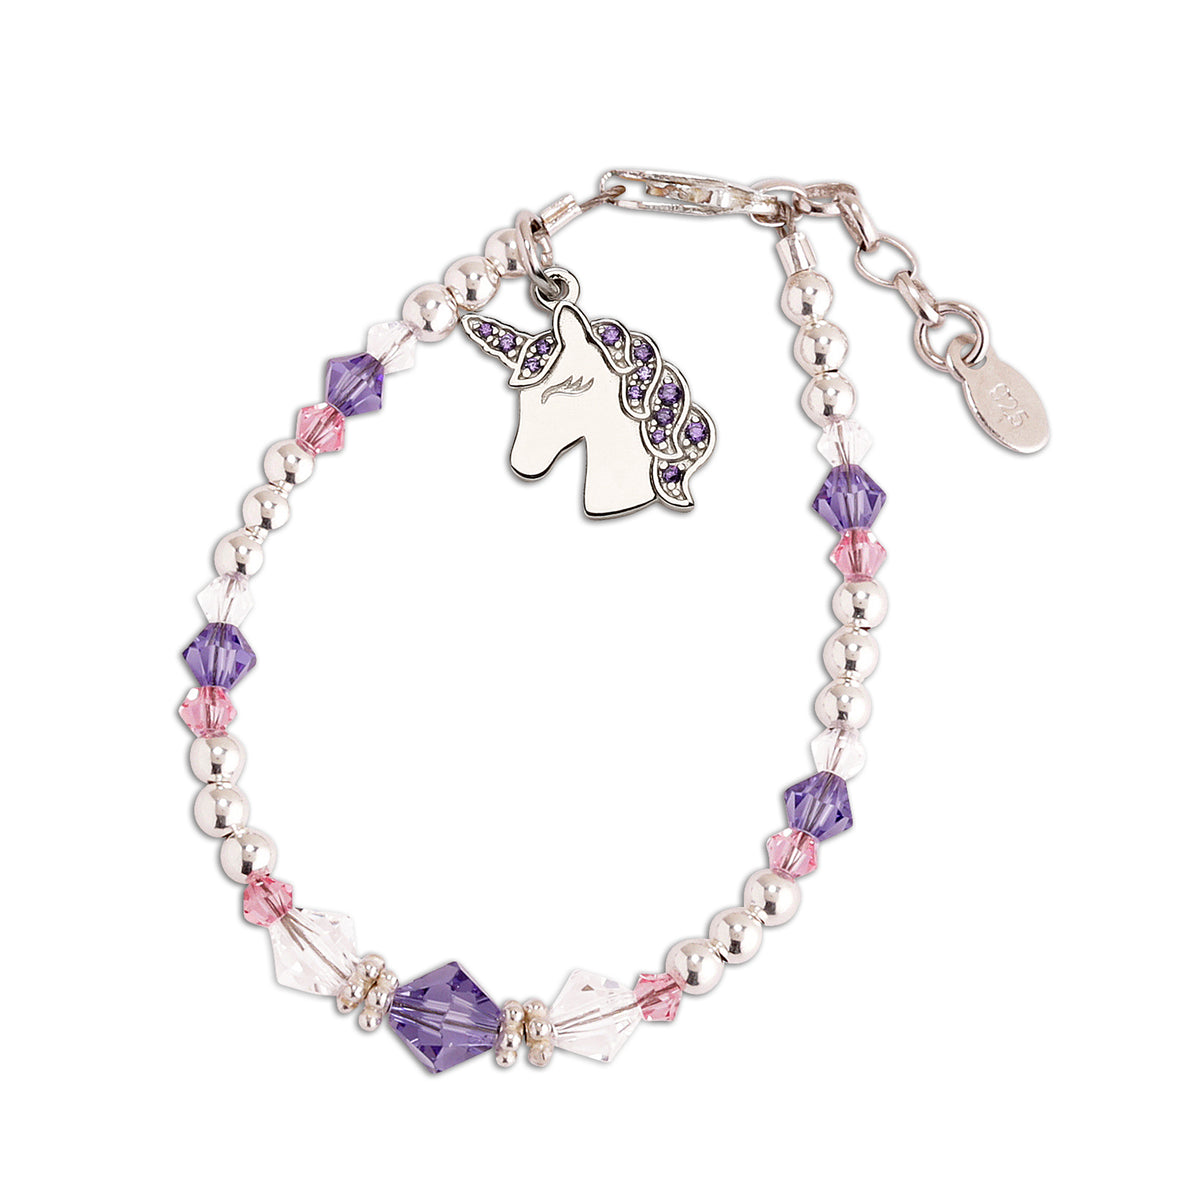 Izoa Kids Unicorn Bracelet Silver - Shop Kids Accessories Online